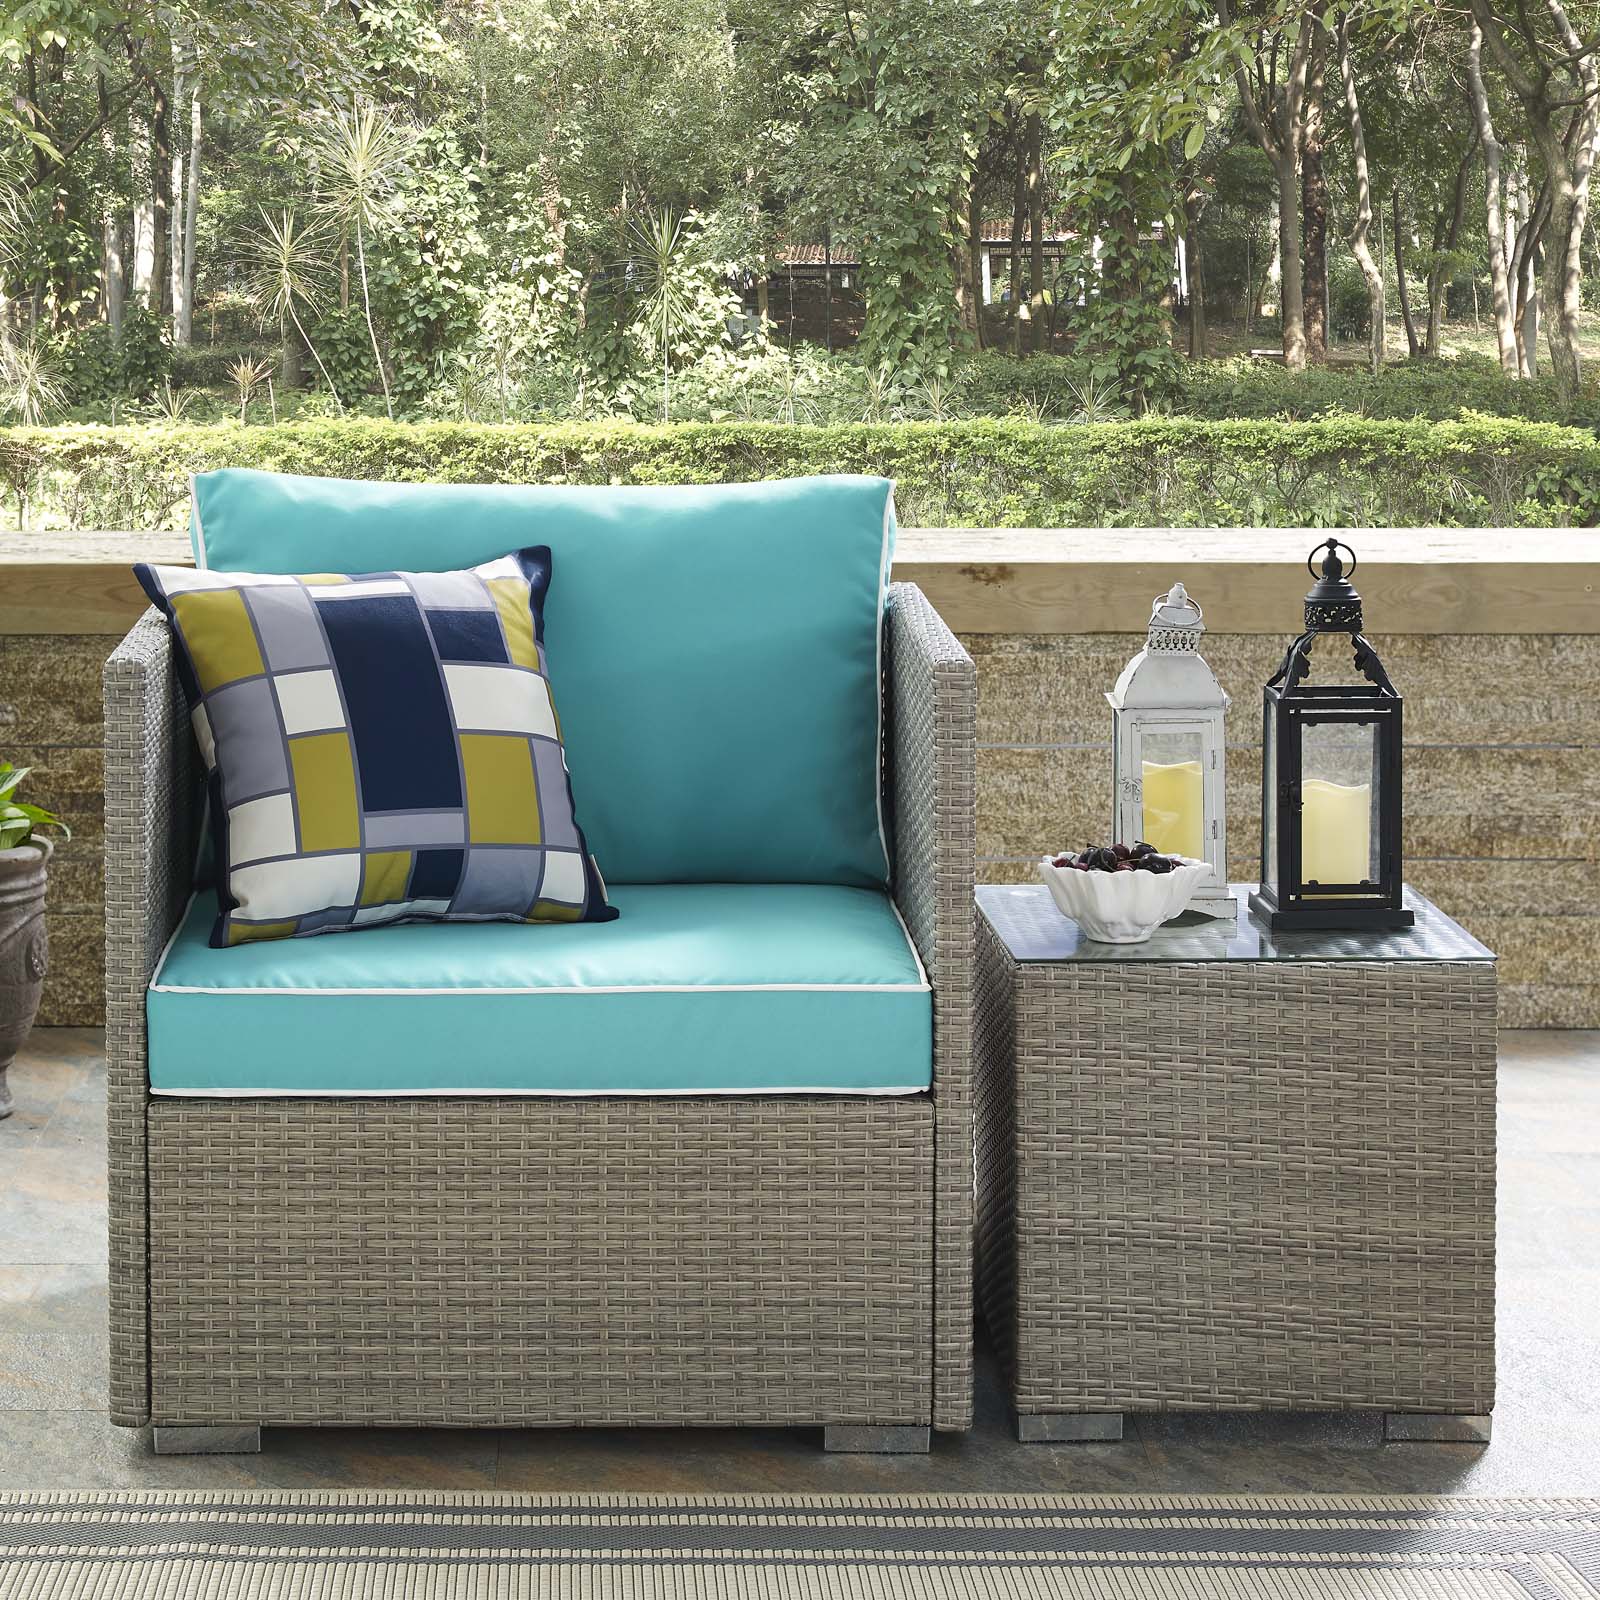 Modern Contemporary Urban Design Outdoor Patio Balcony Garden Furniture Lounge Chair Armchair, Sunbrella Rattan Wicker, Blue Light Gray - image 2 of 4